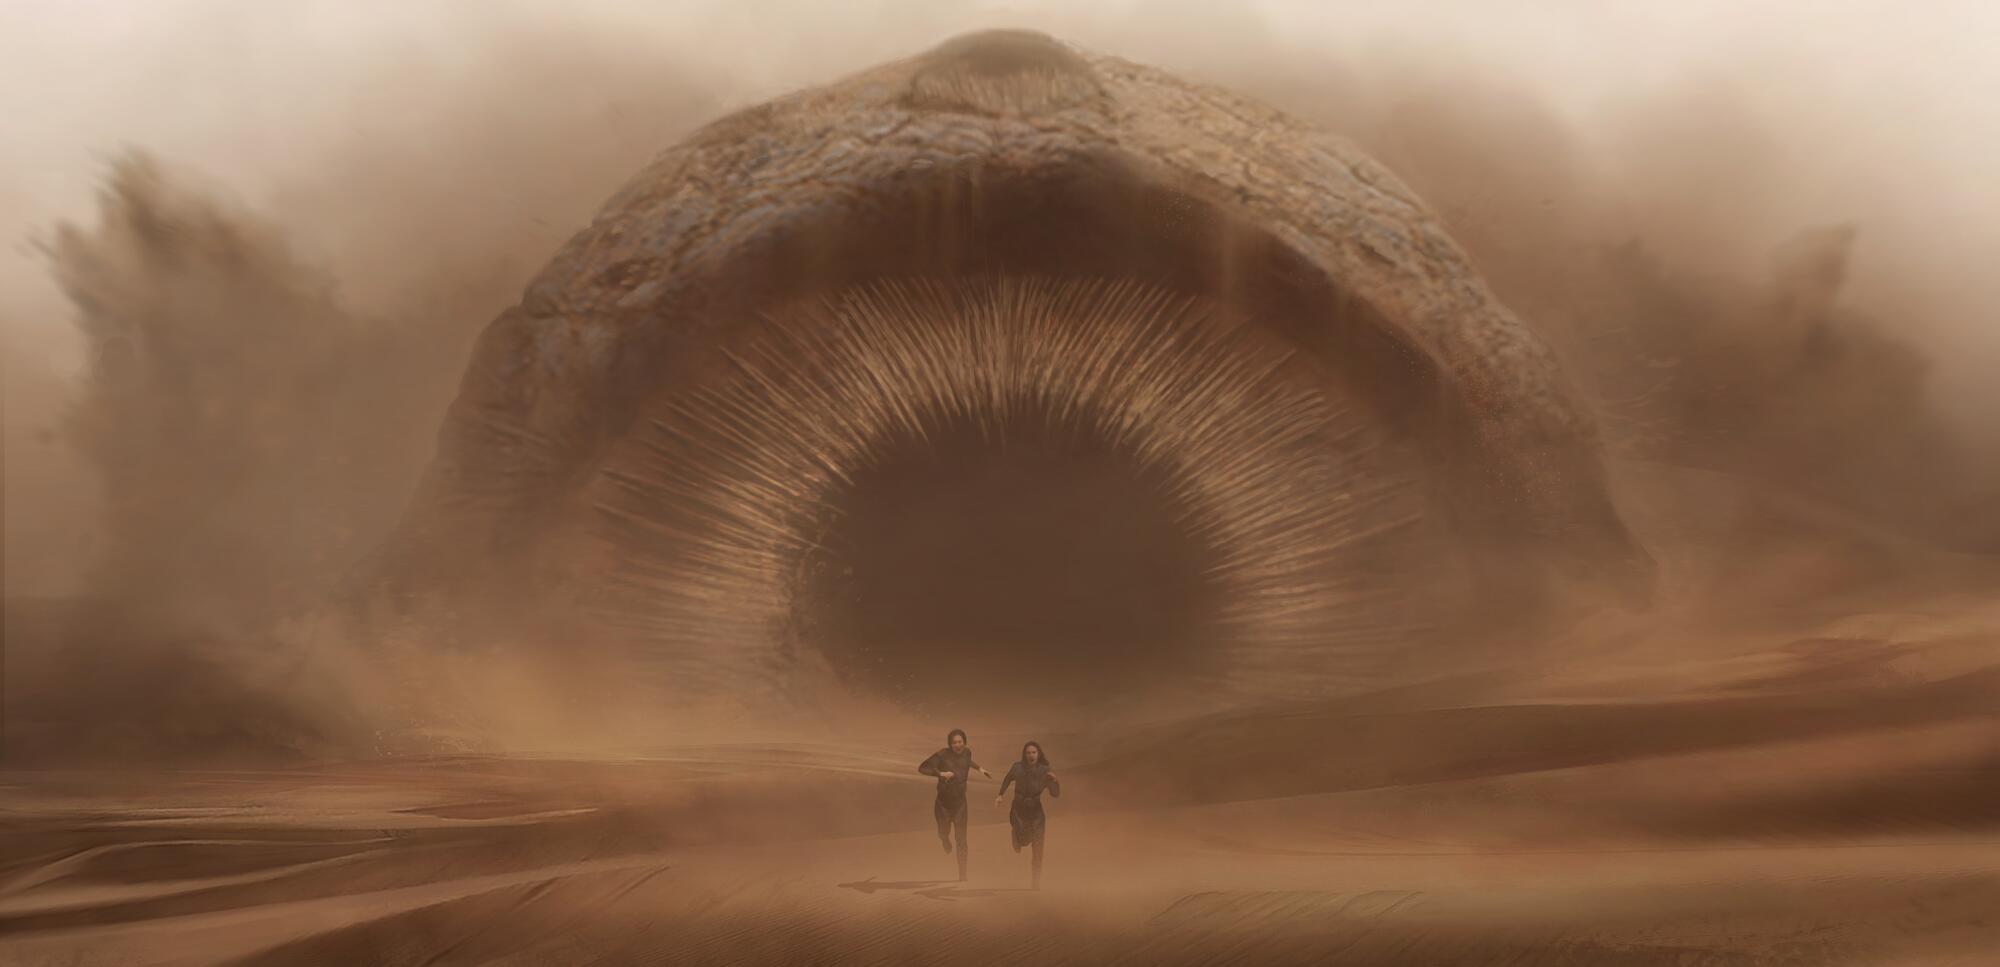 Timothee Chalamet and Rebecca Ferguson flee the gigantic sandworm close behind. 